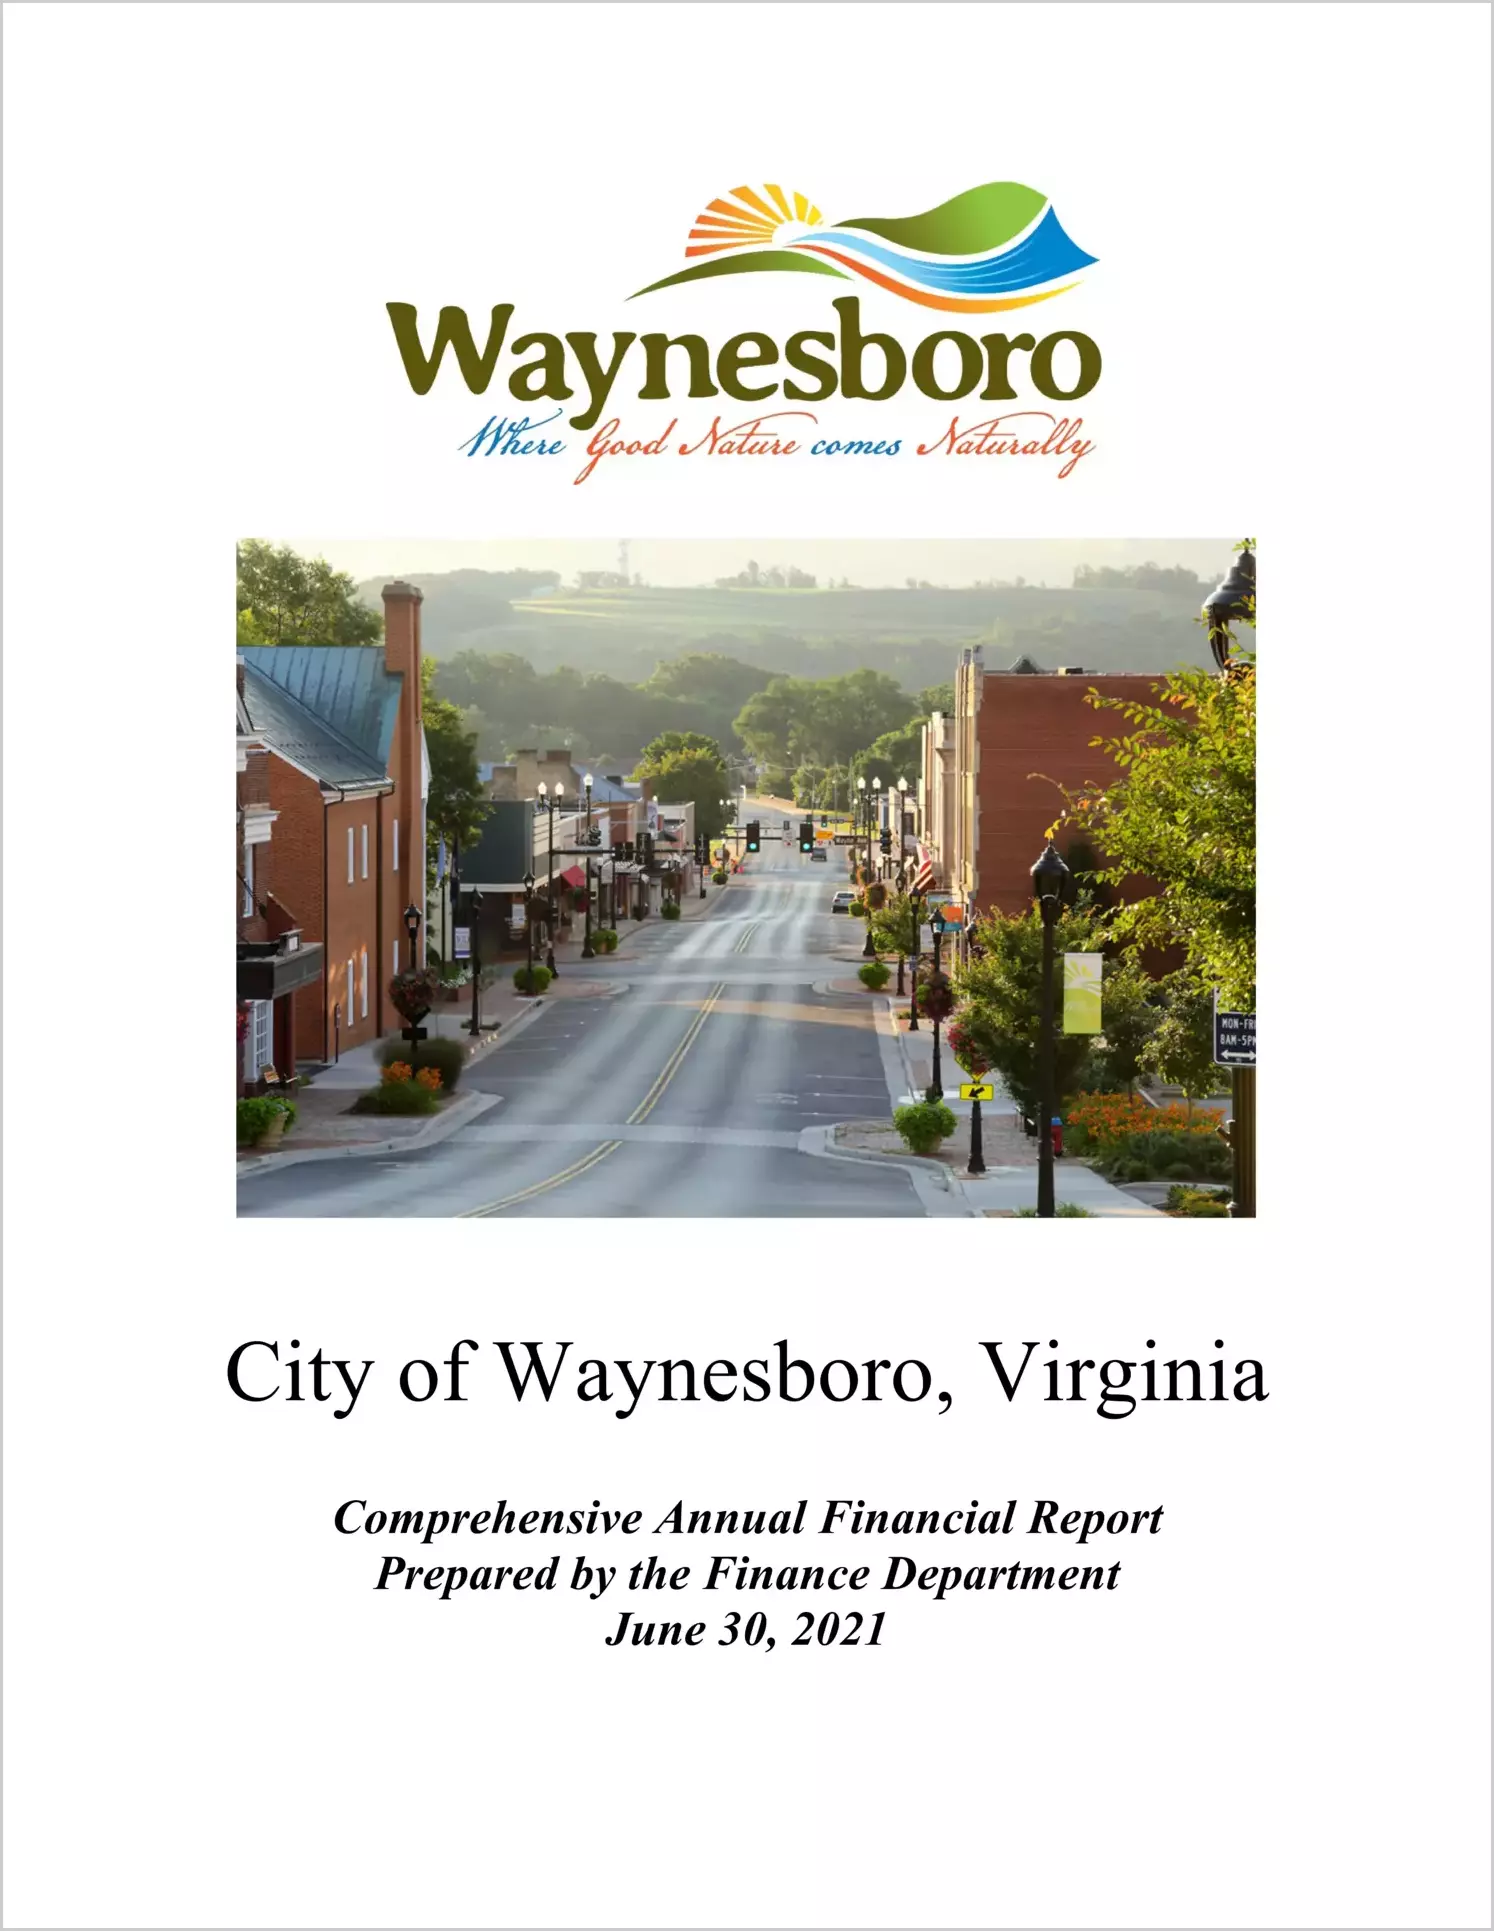 2021 Annual Financial Report for City of Waynesboro